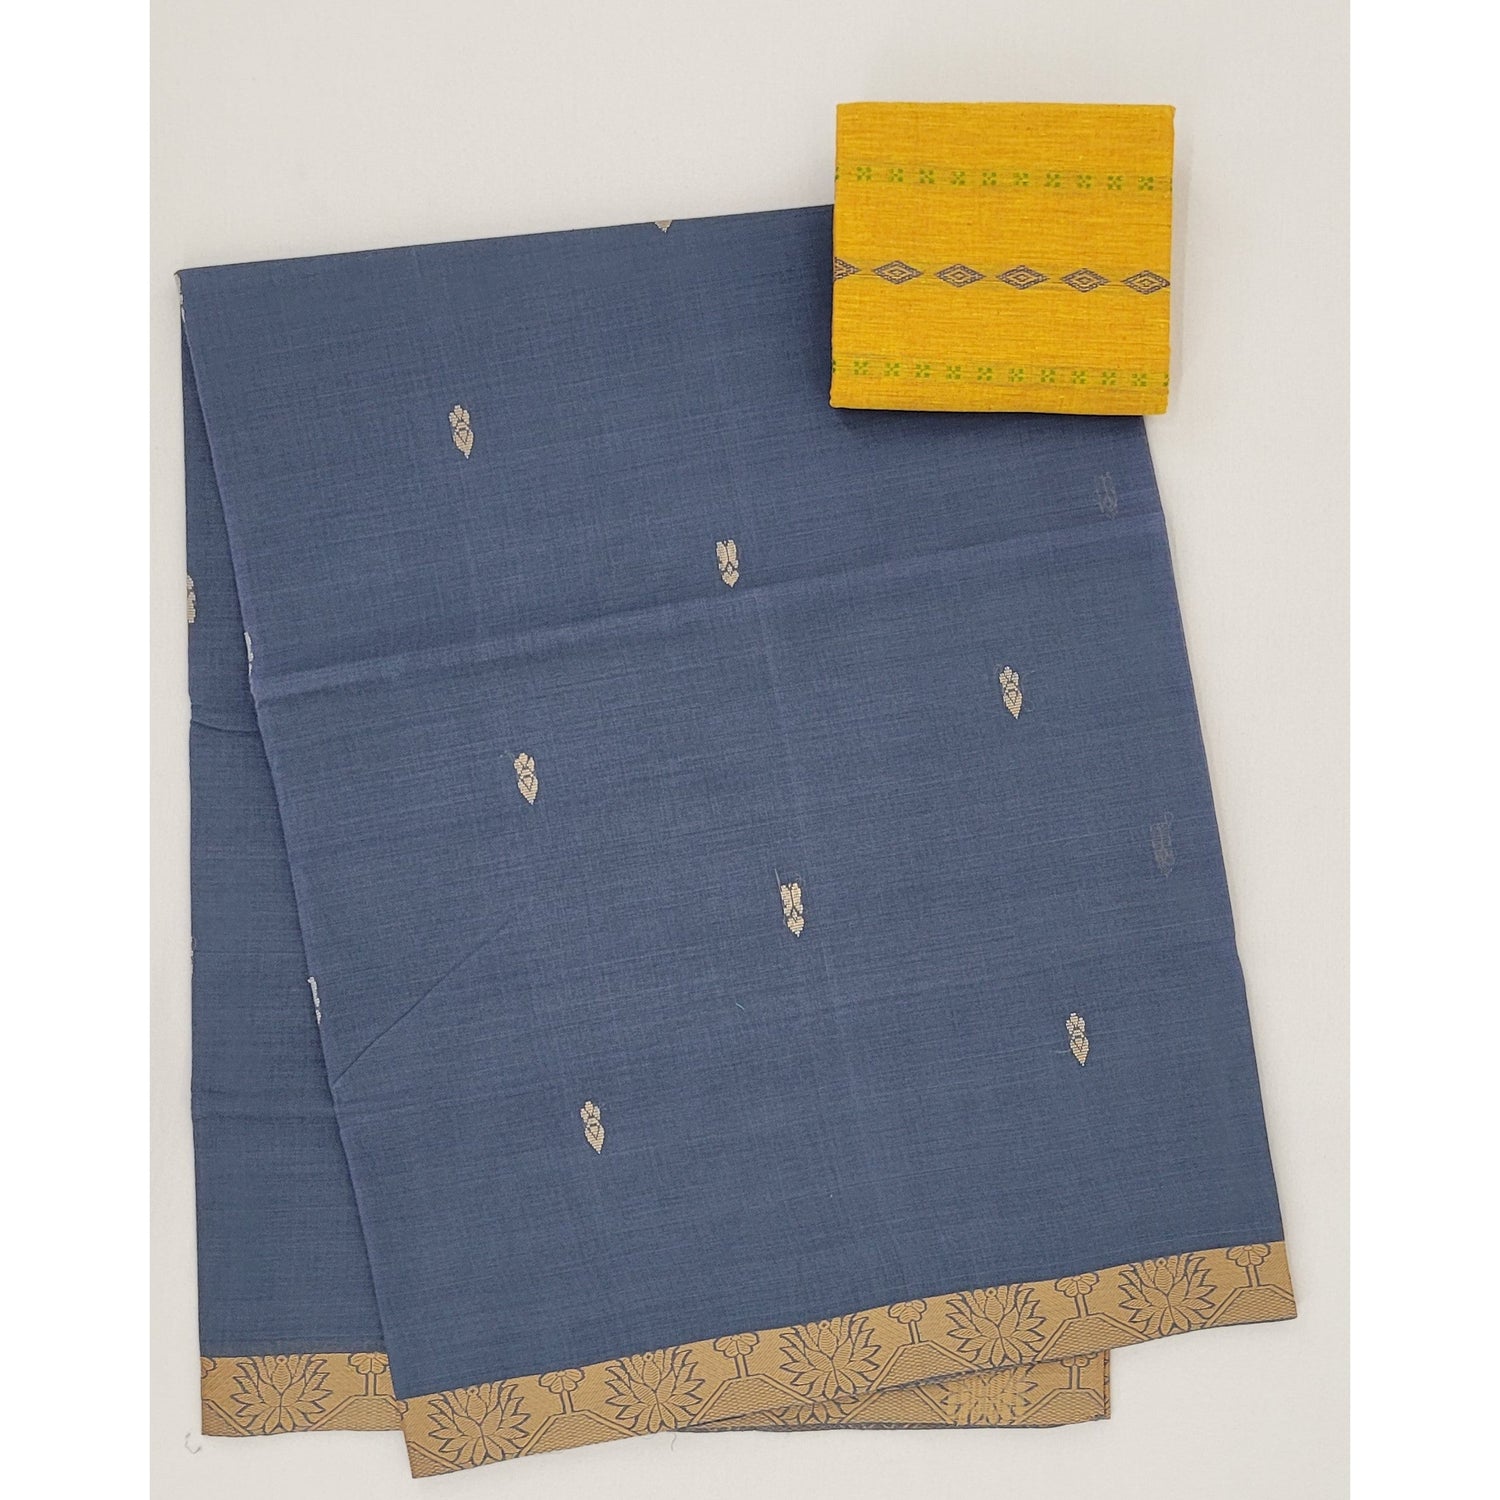 Grey Color Venkatagiri Handloom Cotton Saree - Vinshika